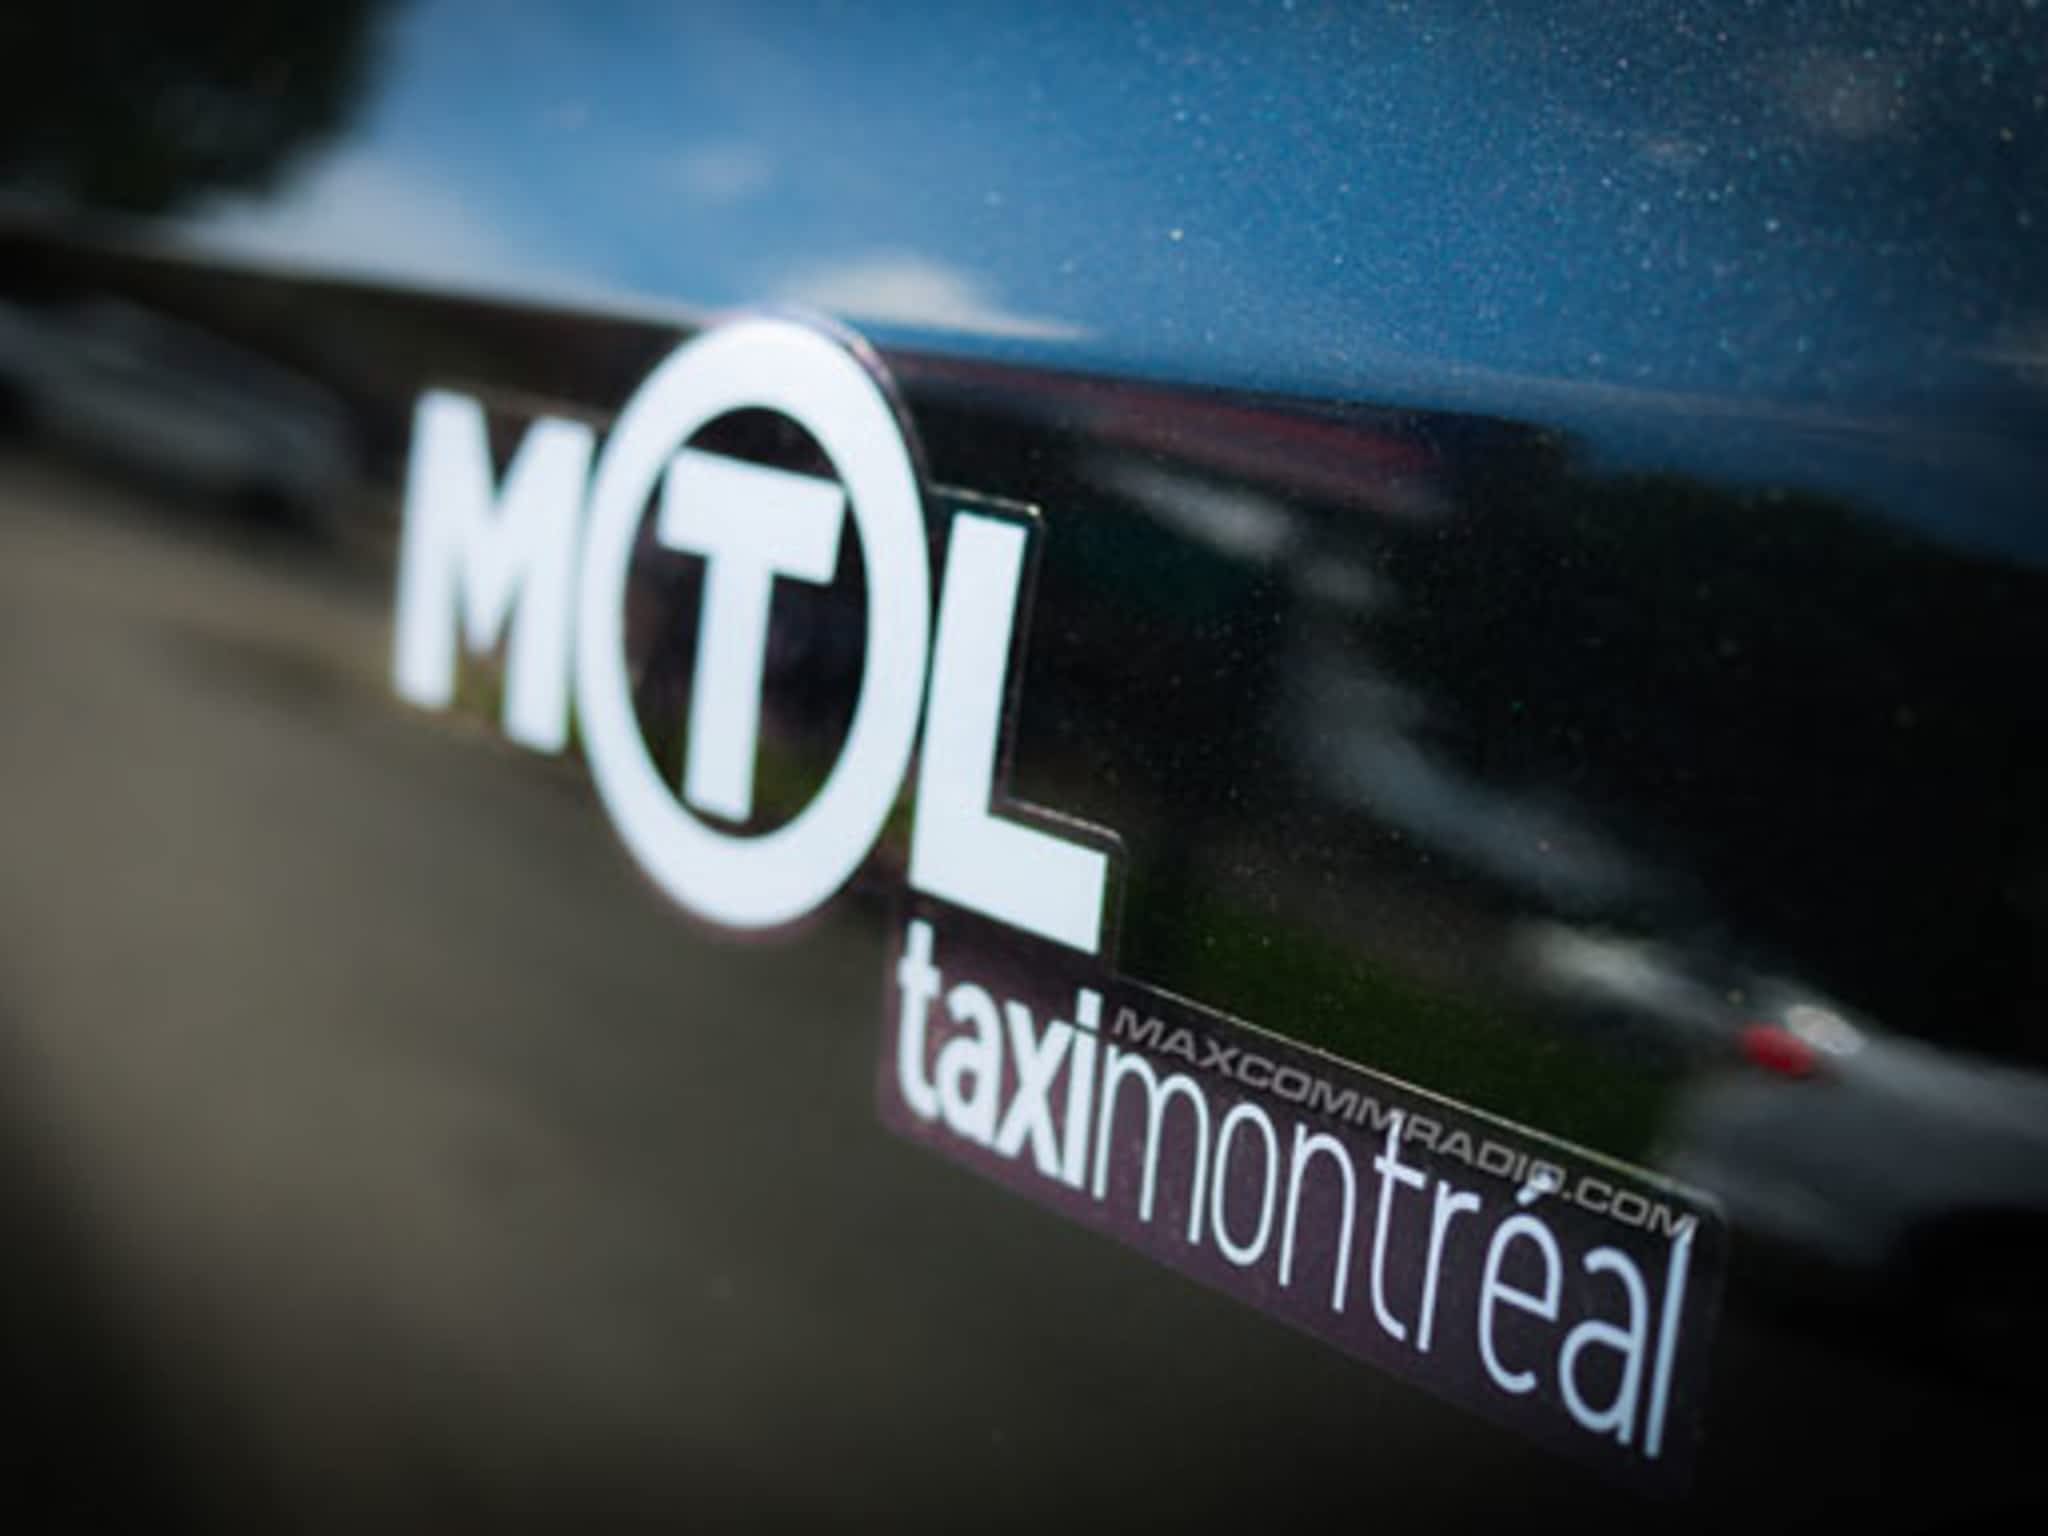 photo Maxcomm Radio Montréal Taximètre